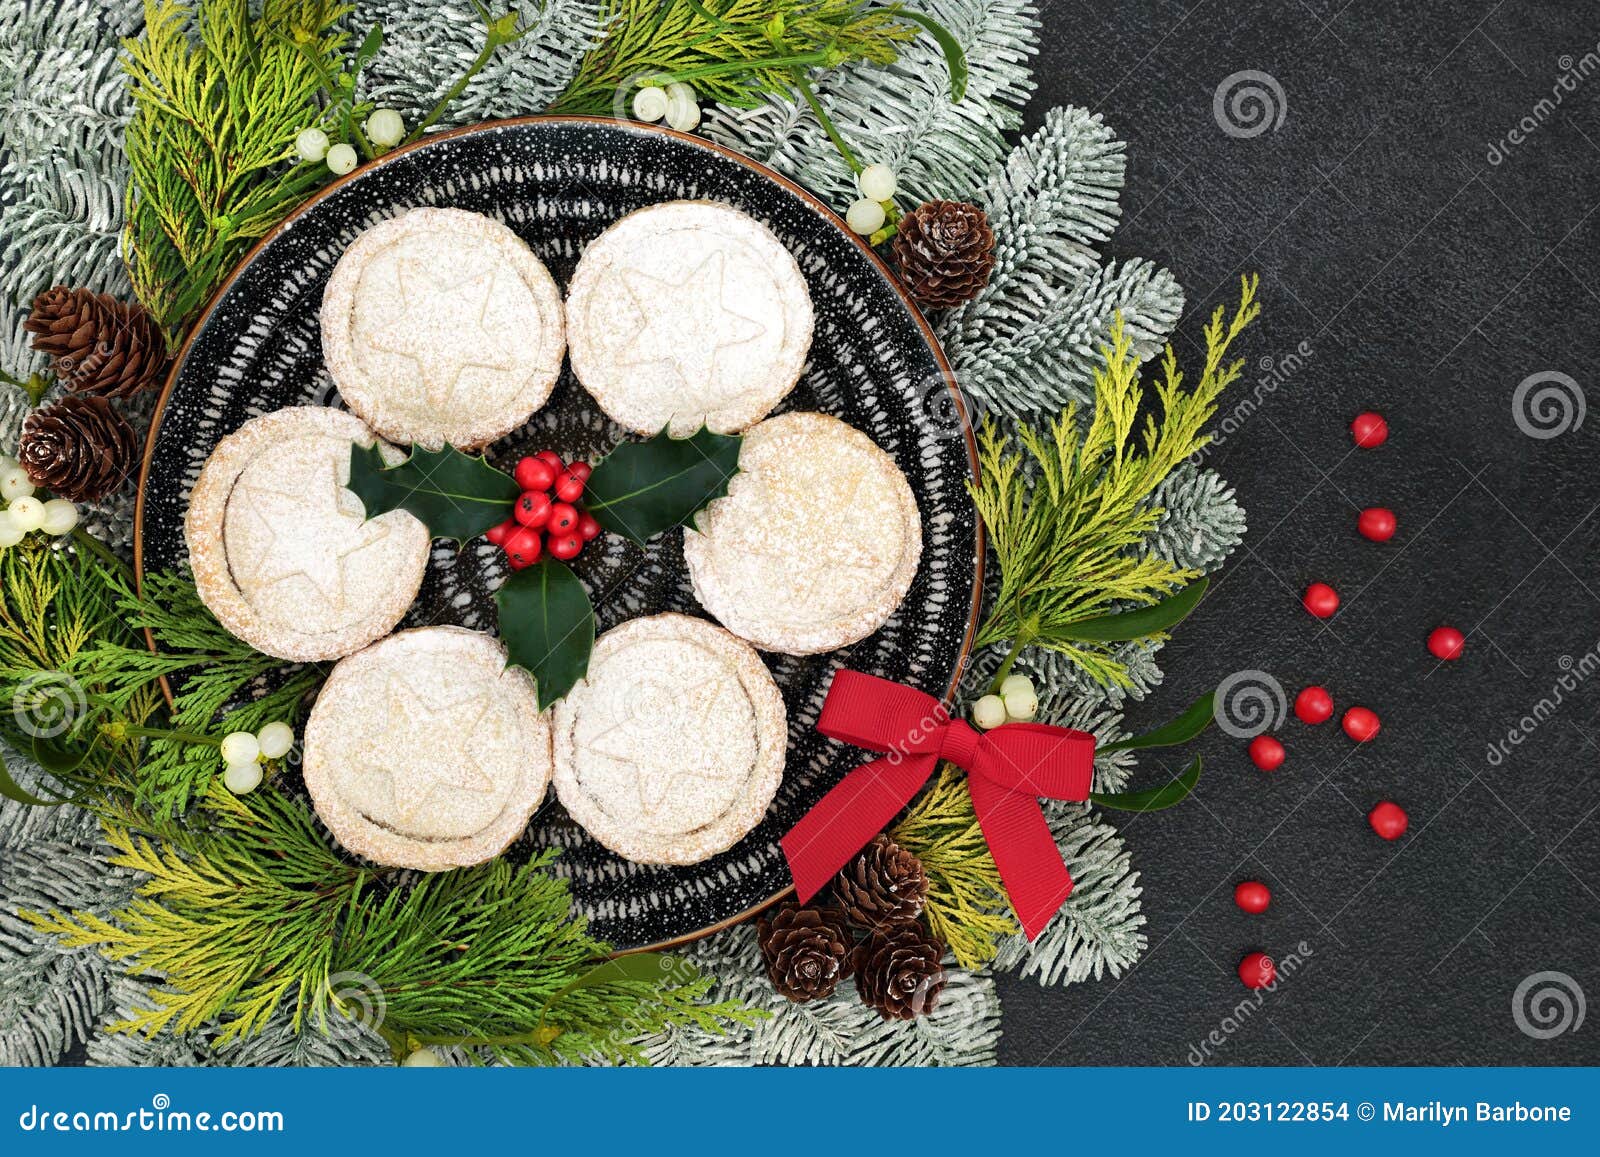 festive homemade christmas mince pies